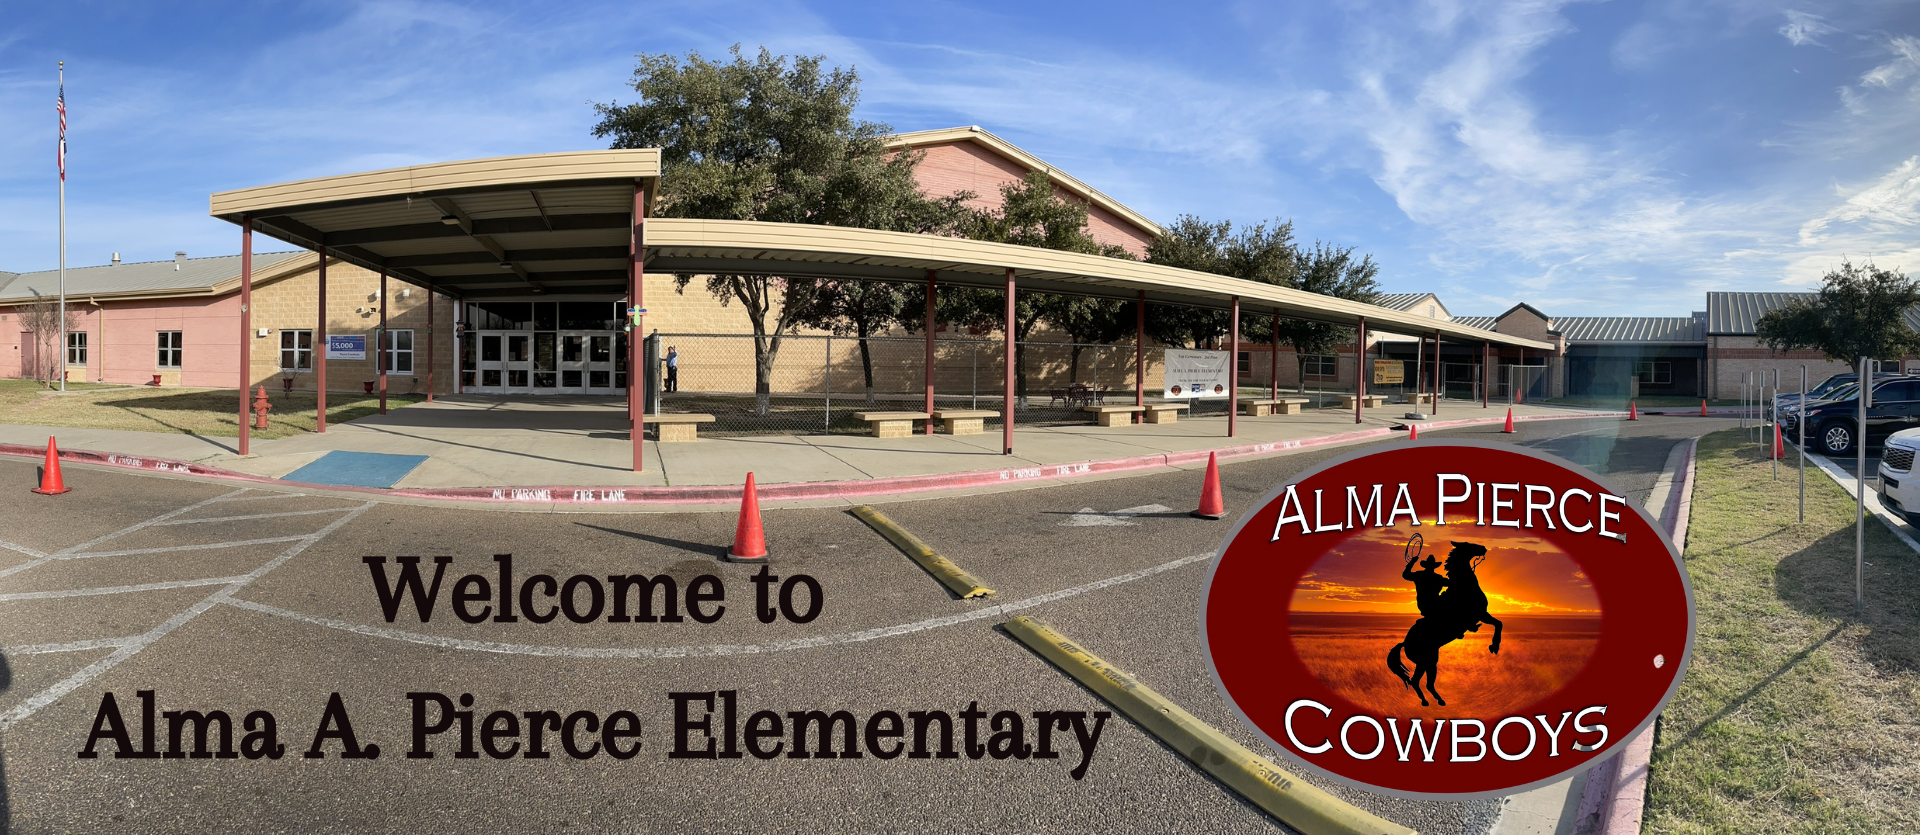 Alma A. Pierce Elementary Building